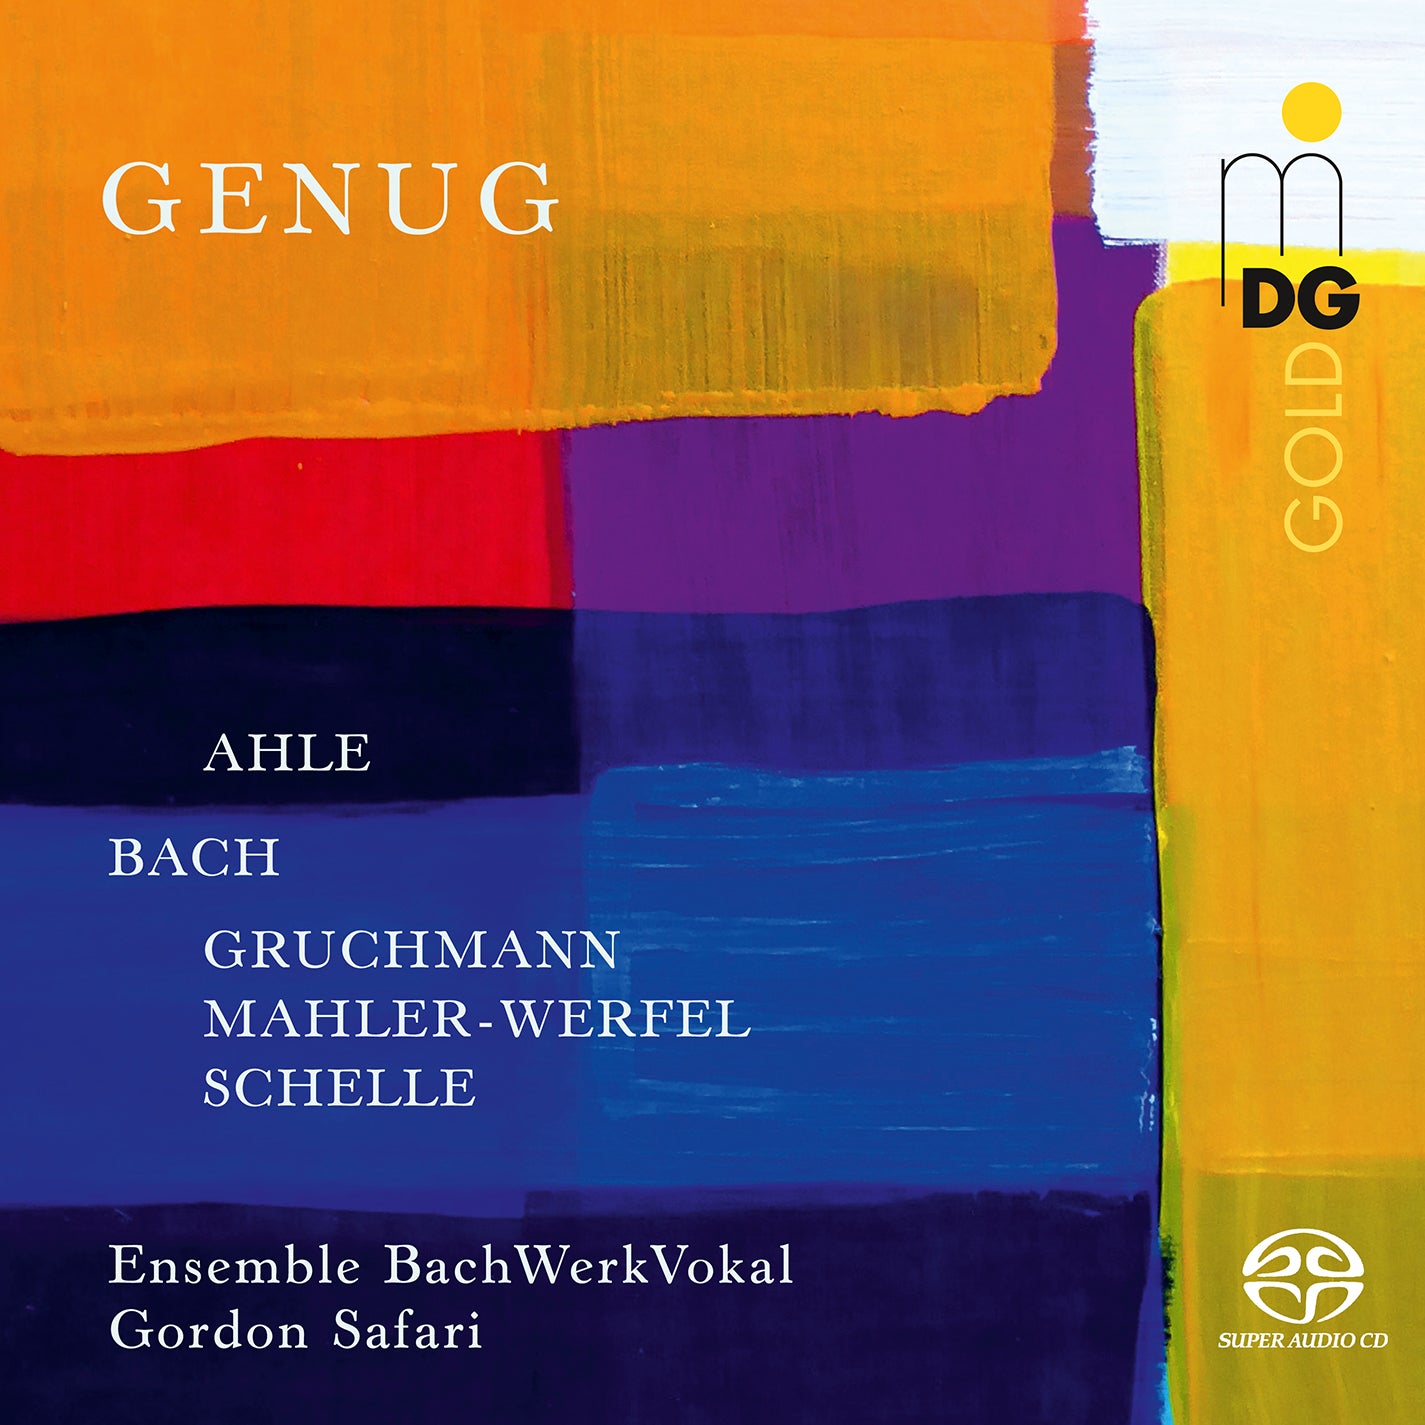 Ahle, Bach, A. Mahler et al: Genug [Enough] / Safari, Ensemble BachWerkVokal